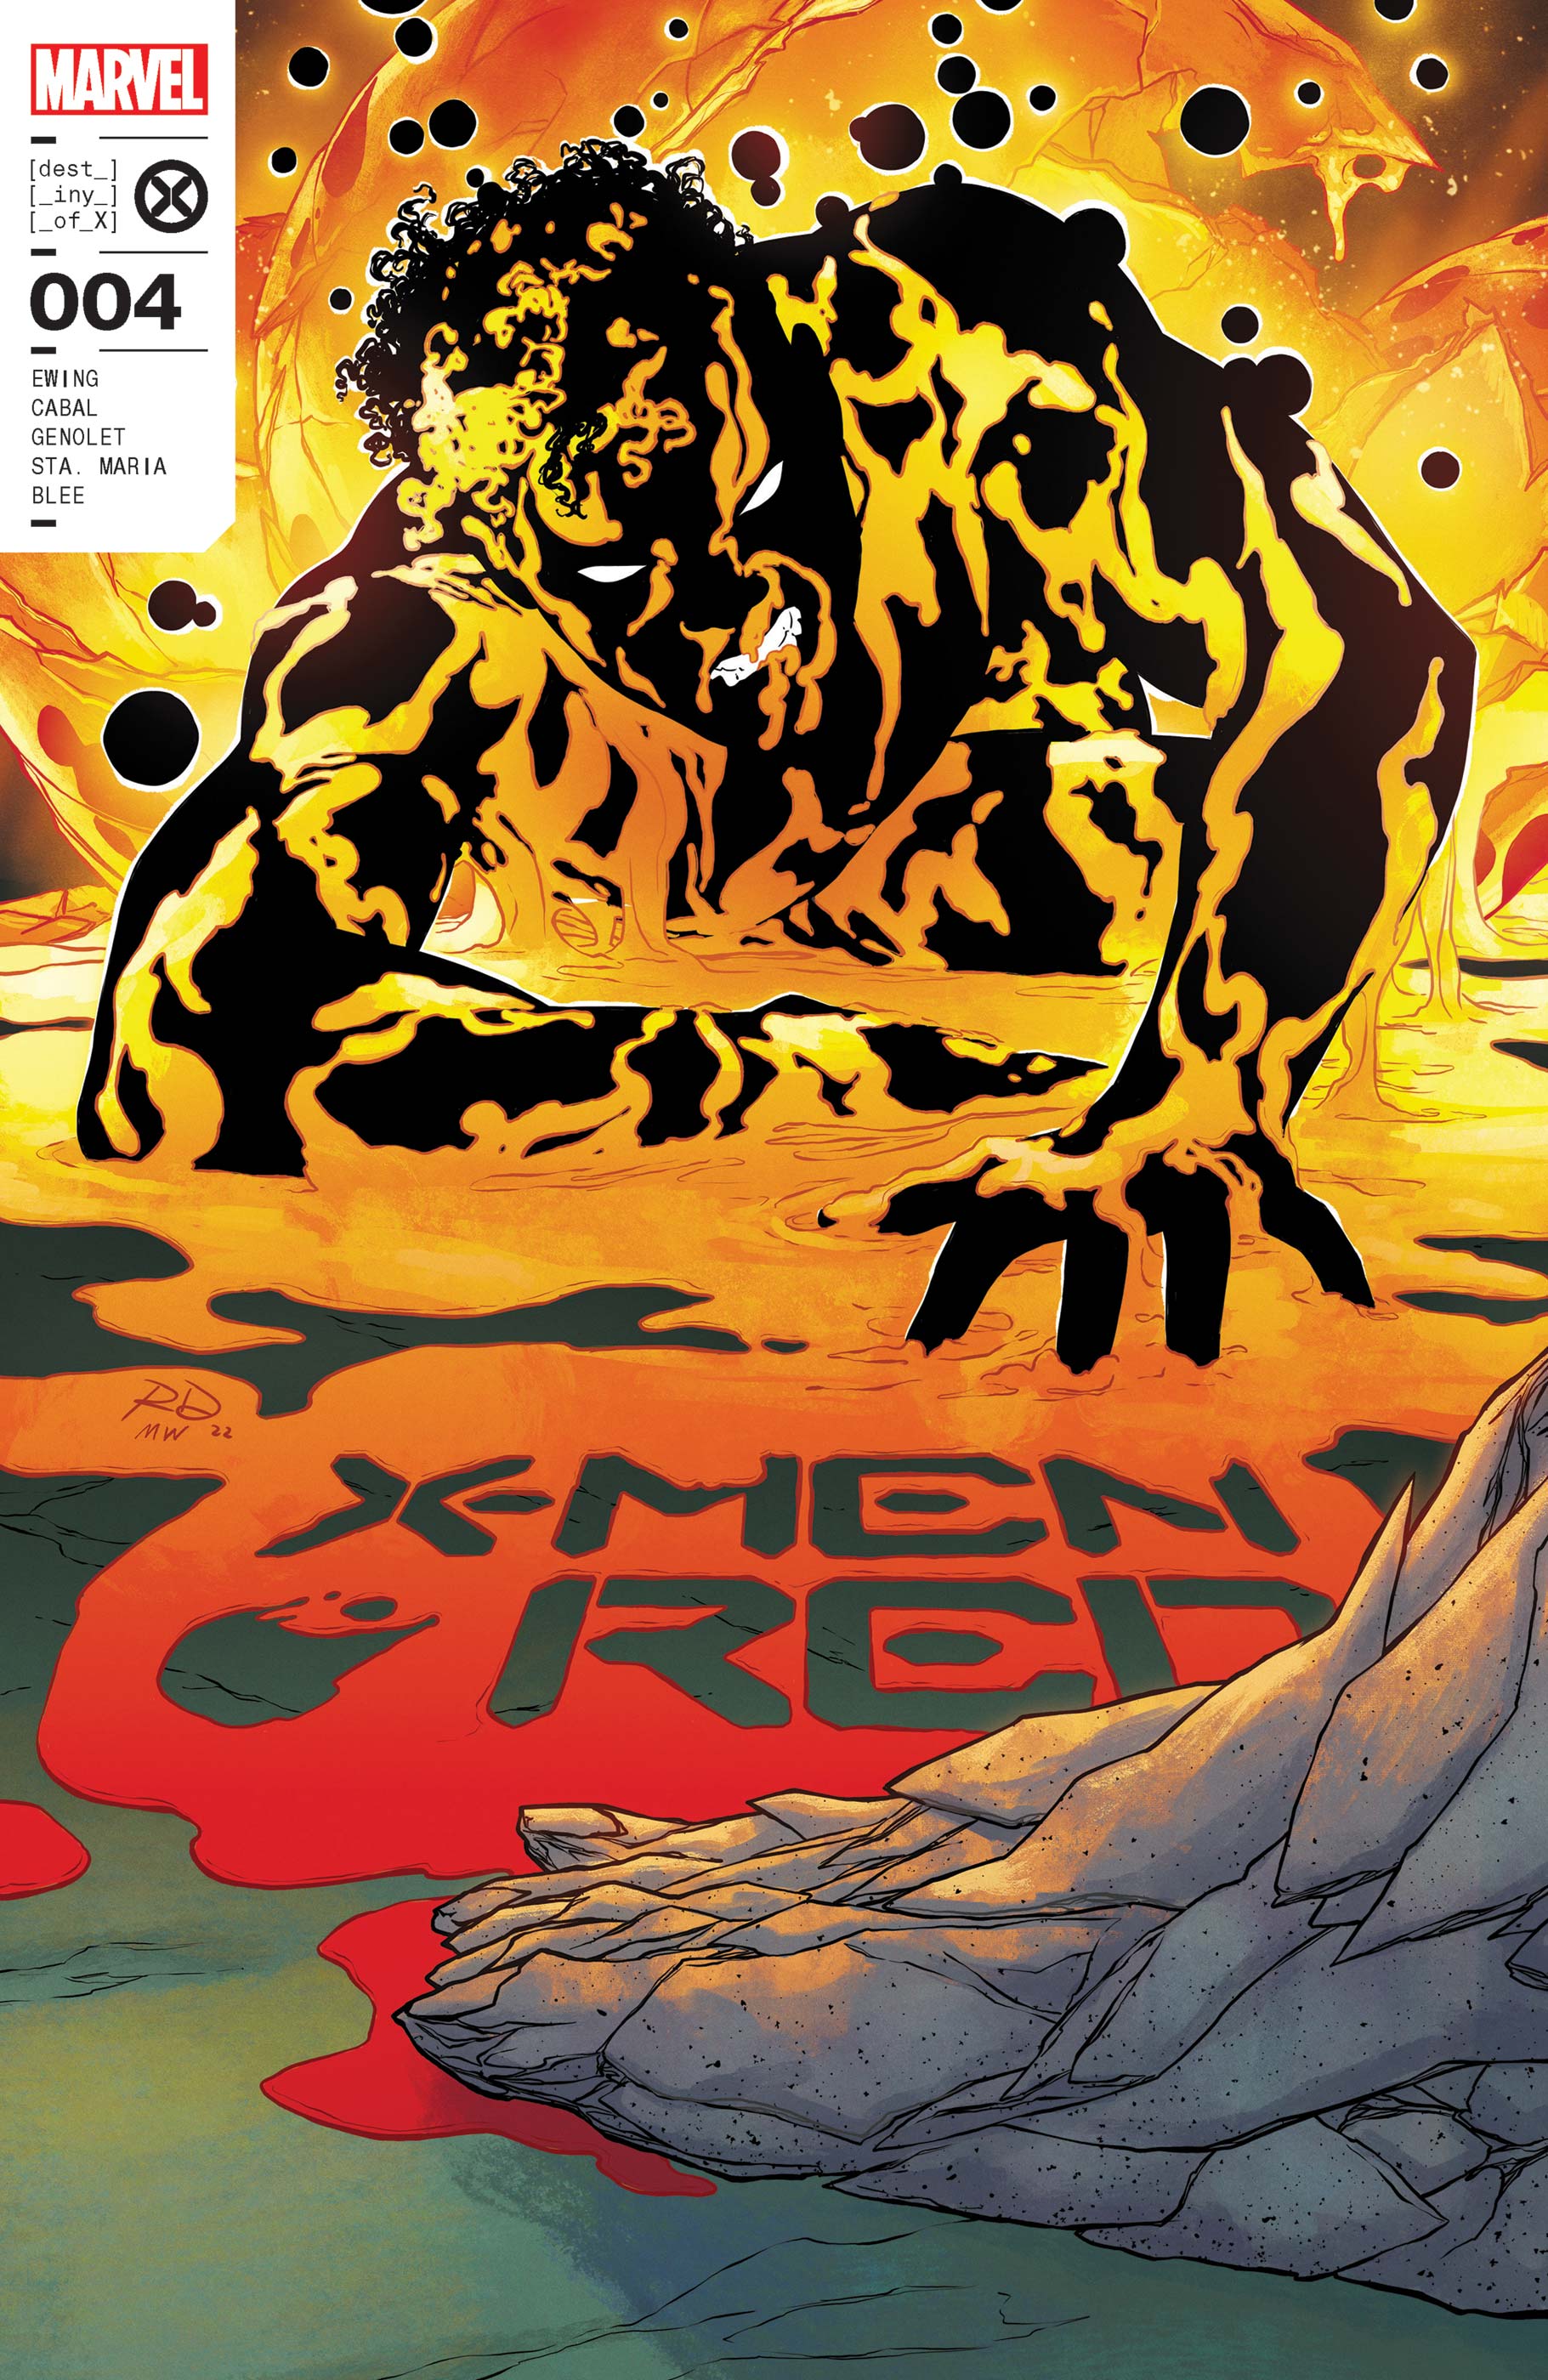 X-Men Red (2022) #4